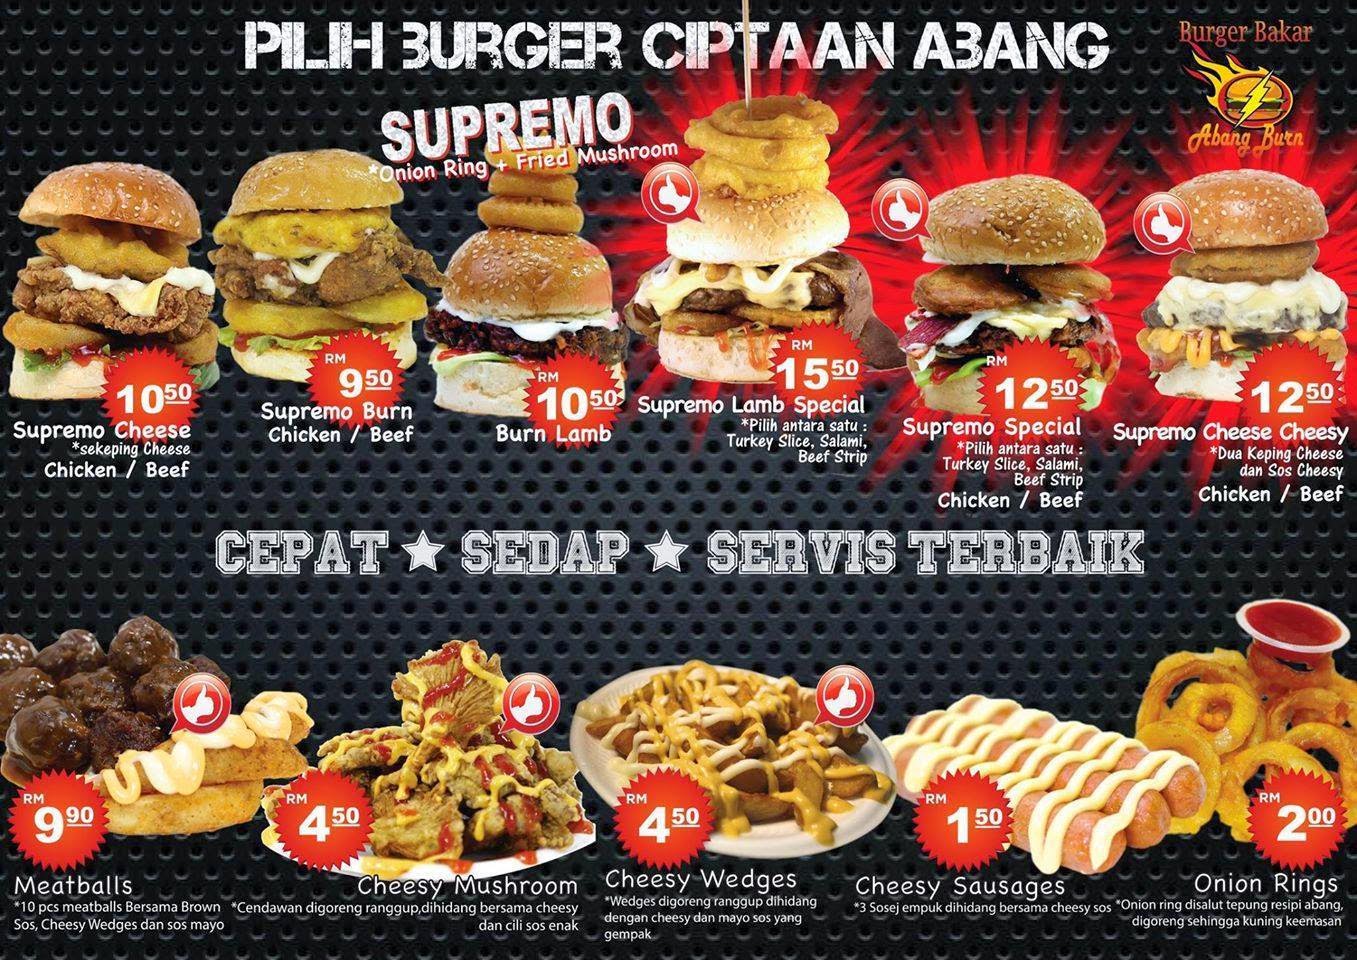 Burger Bakar Abang Burn Low Promotional Prices @ Section 7 